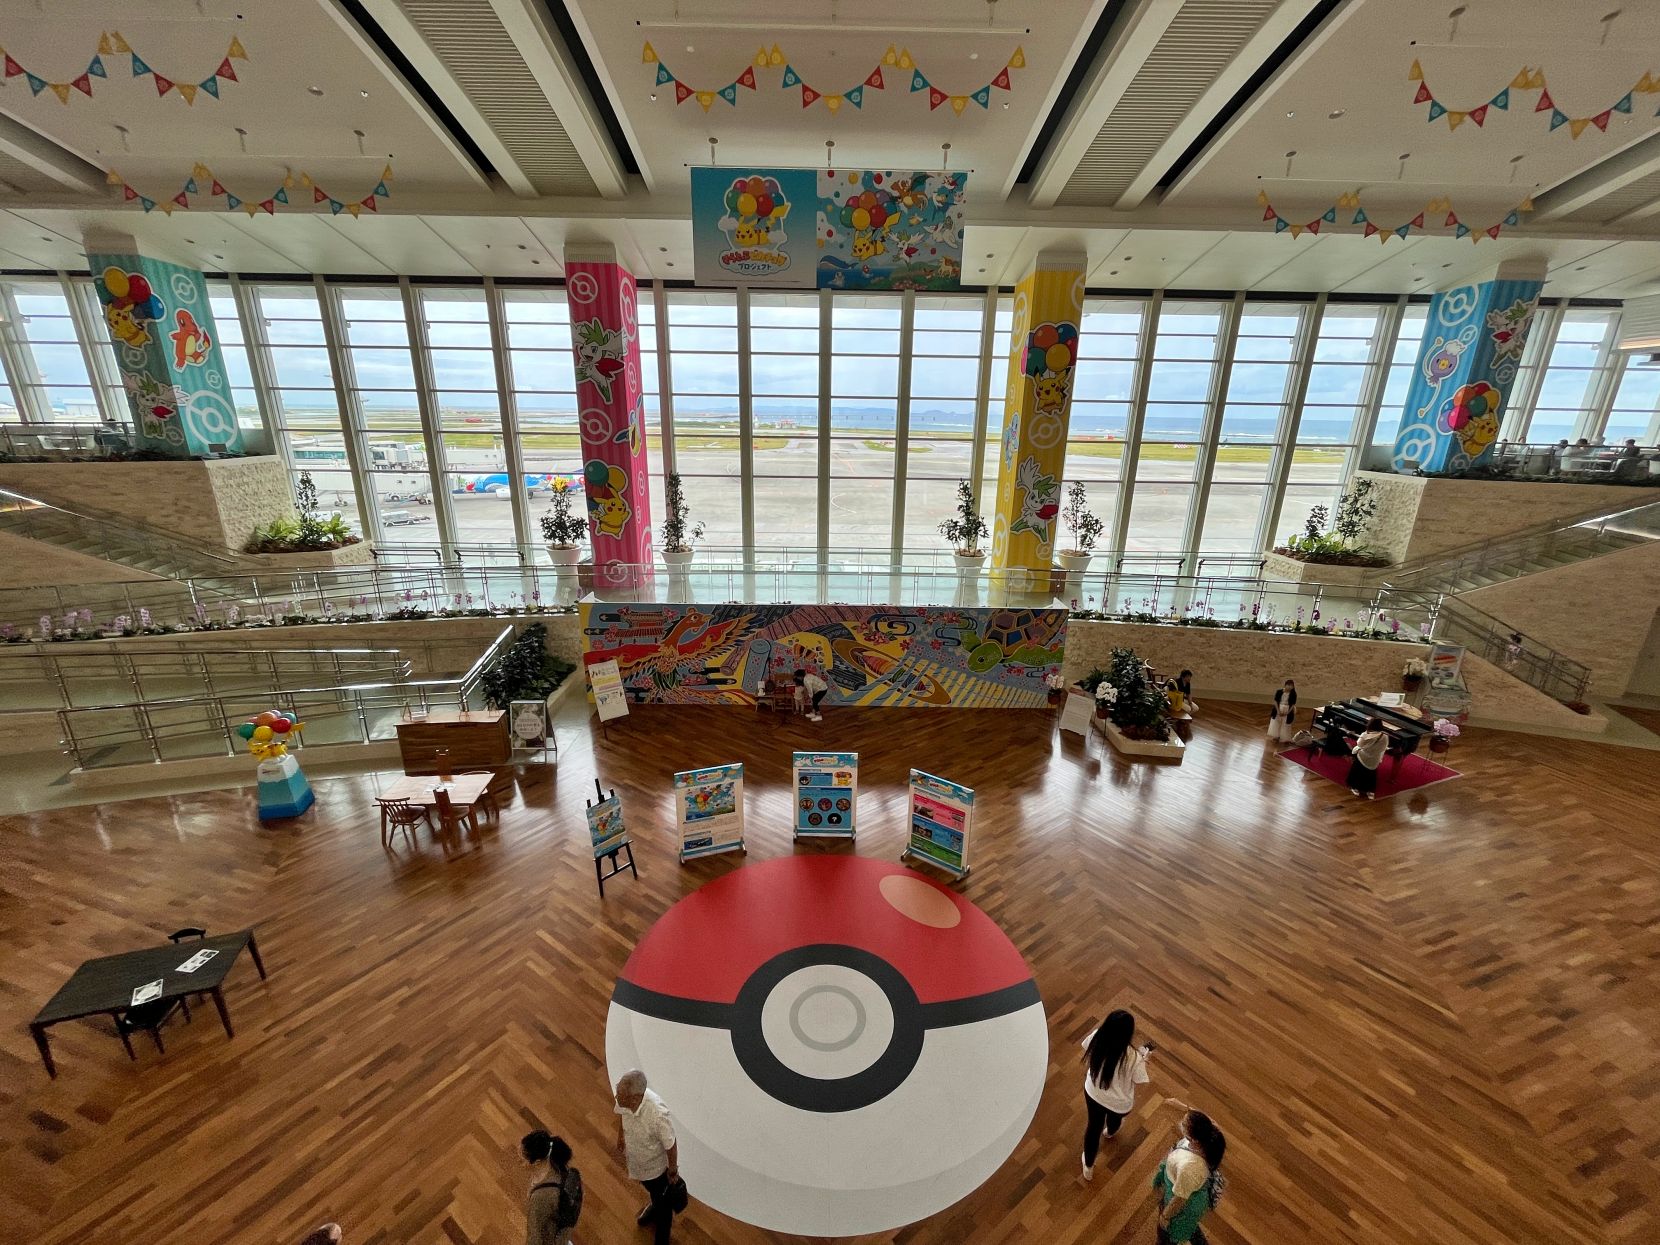 Two-story atrium heavily decorated with Pokémon.